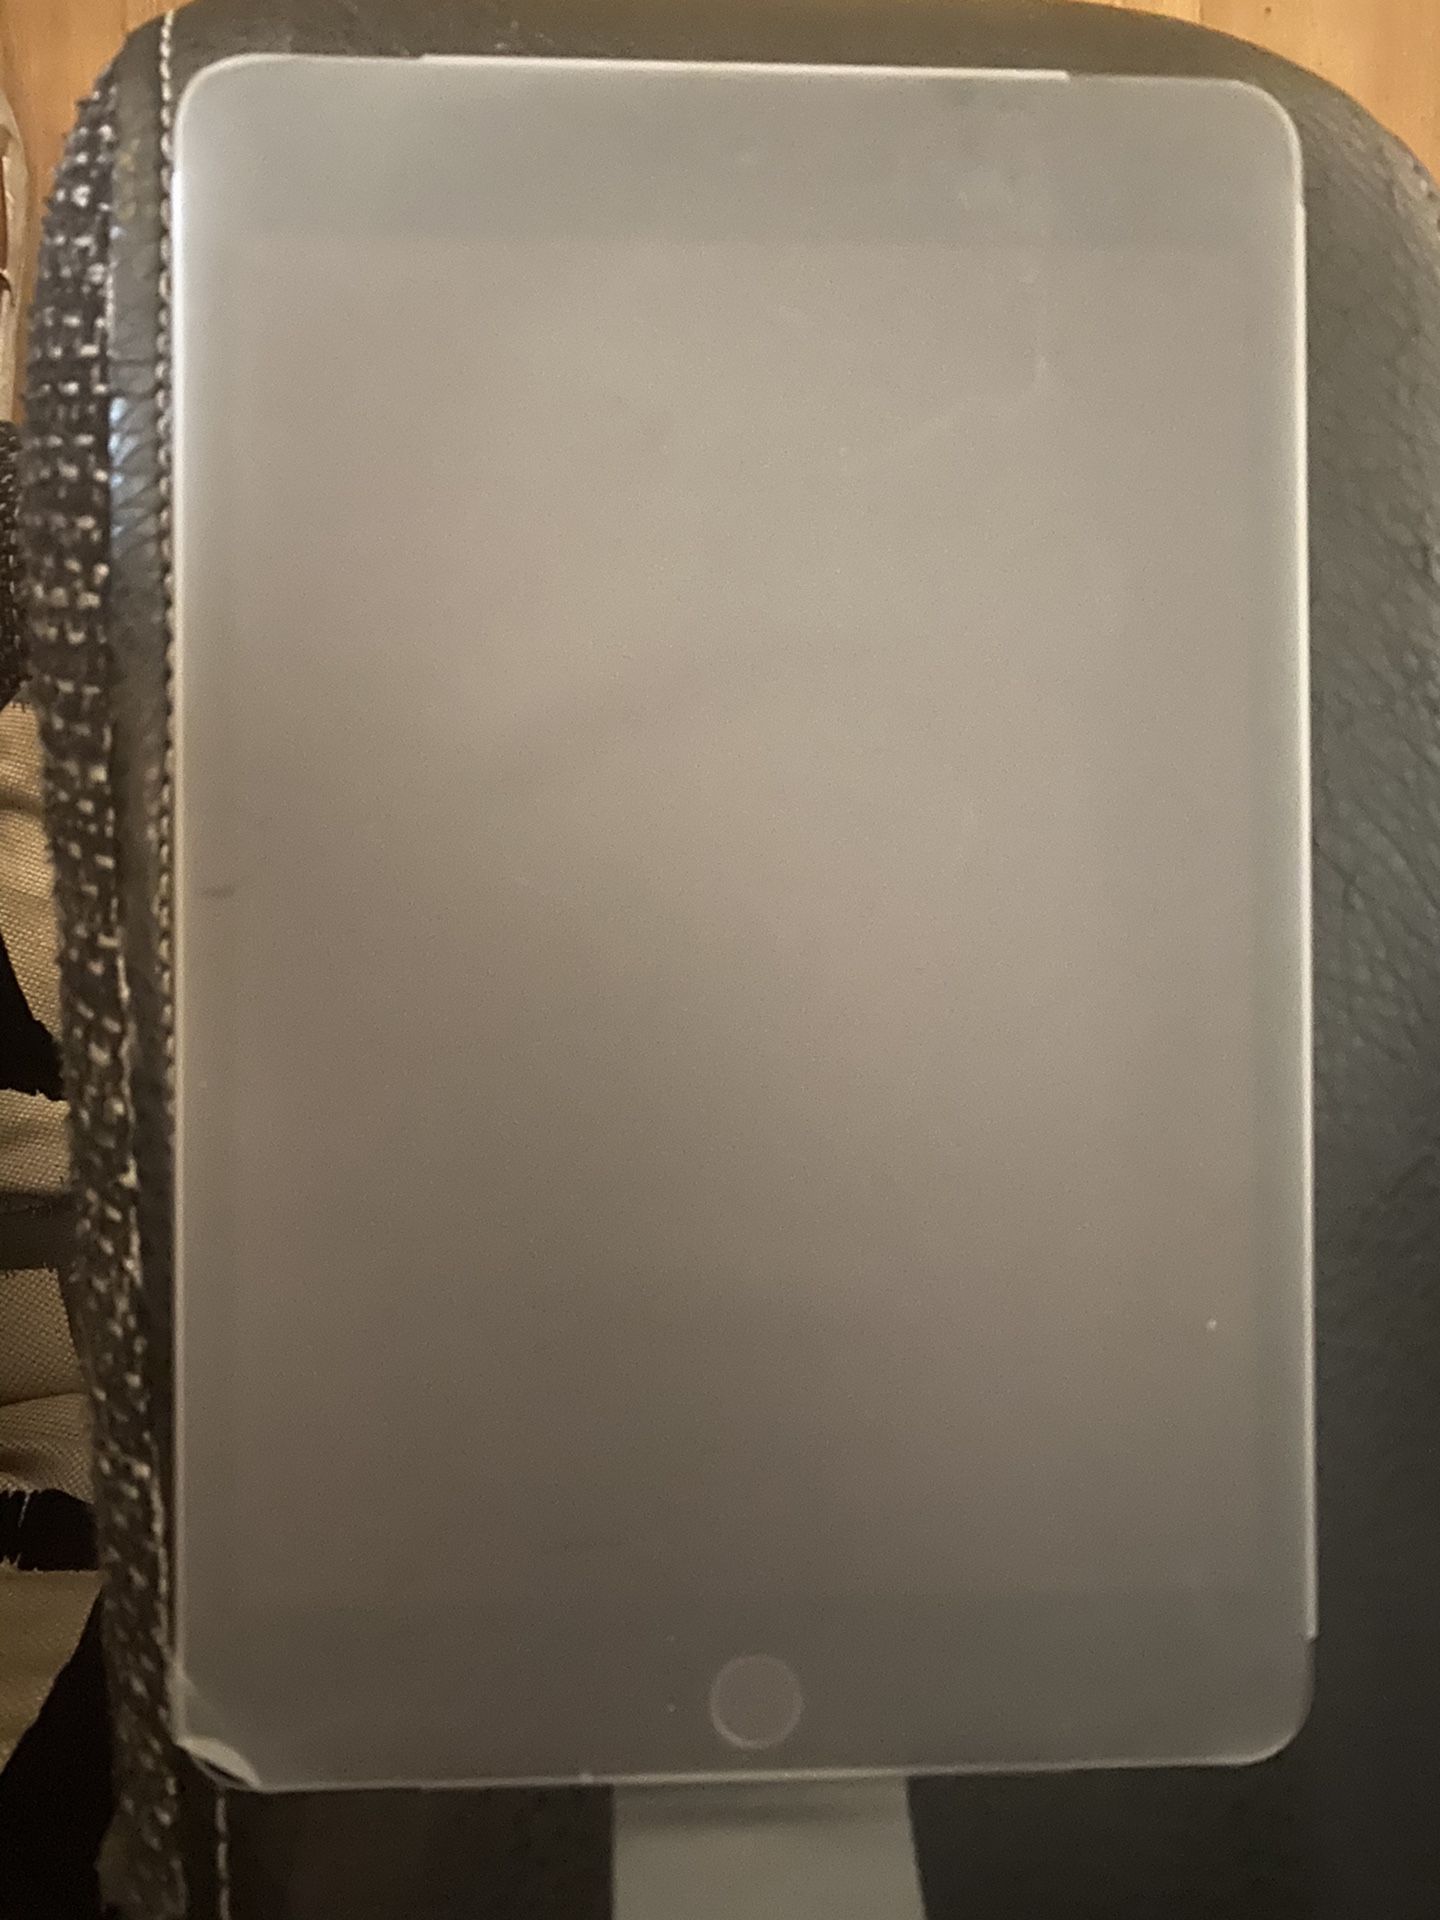 Space gray 5th generation iPad mini 📱